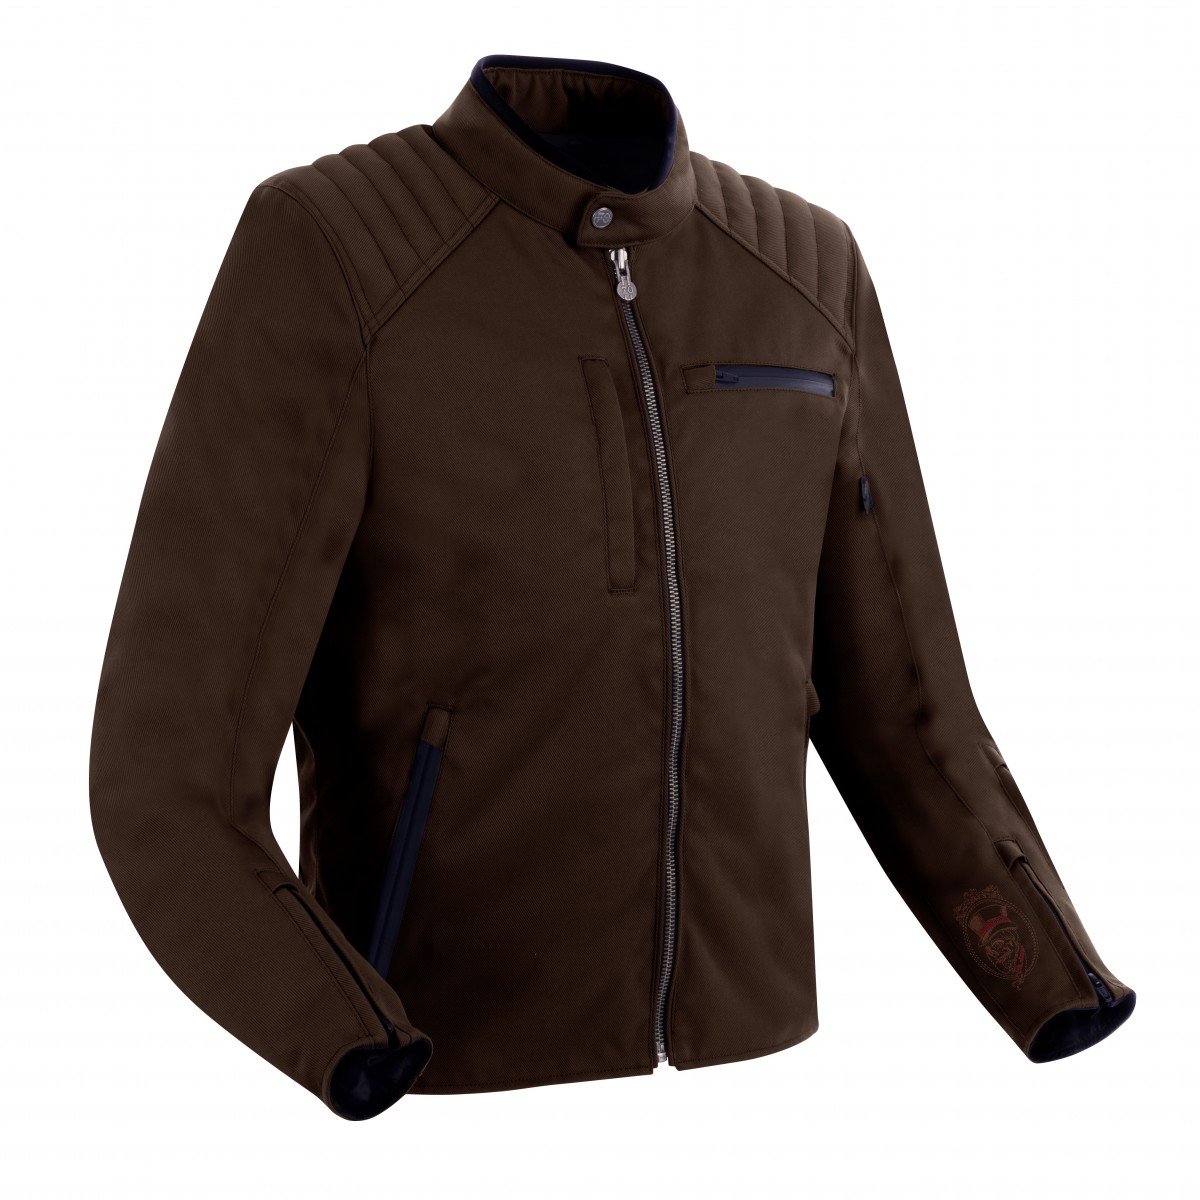 Image of Segura Eternal Jacket Brown Size 3XL ID 3660815168608